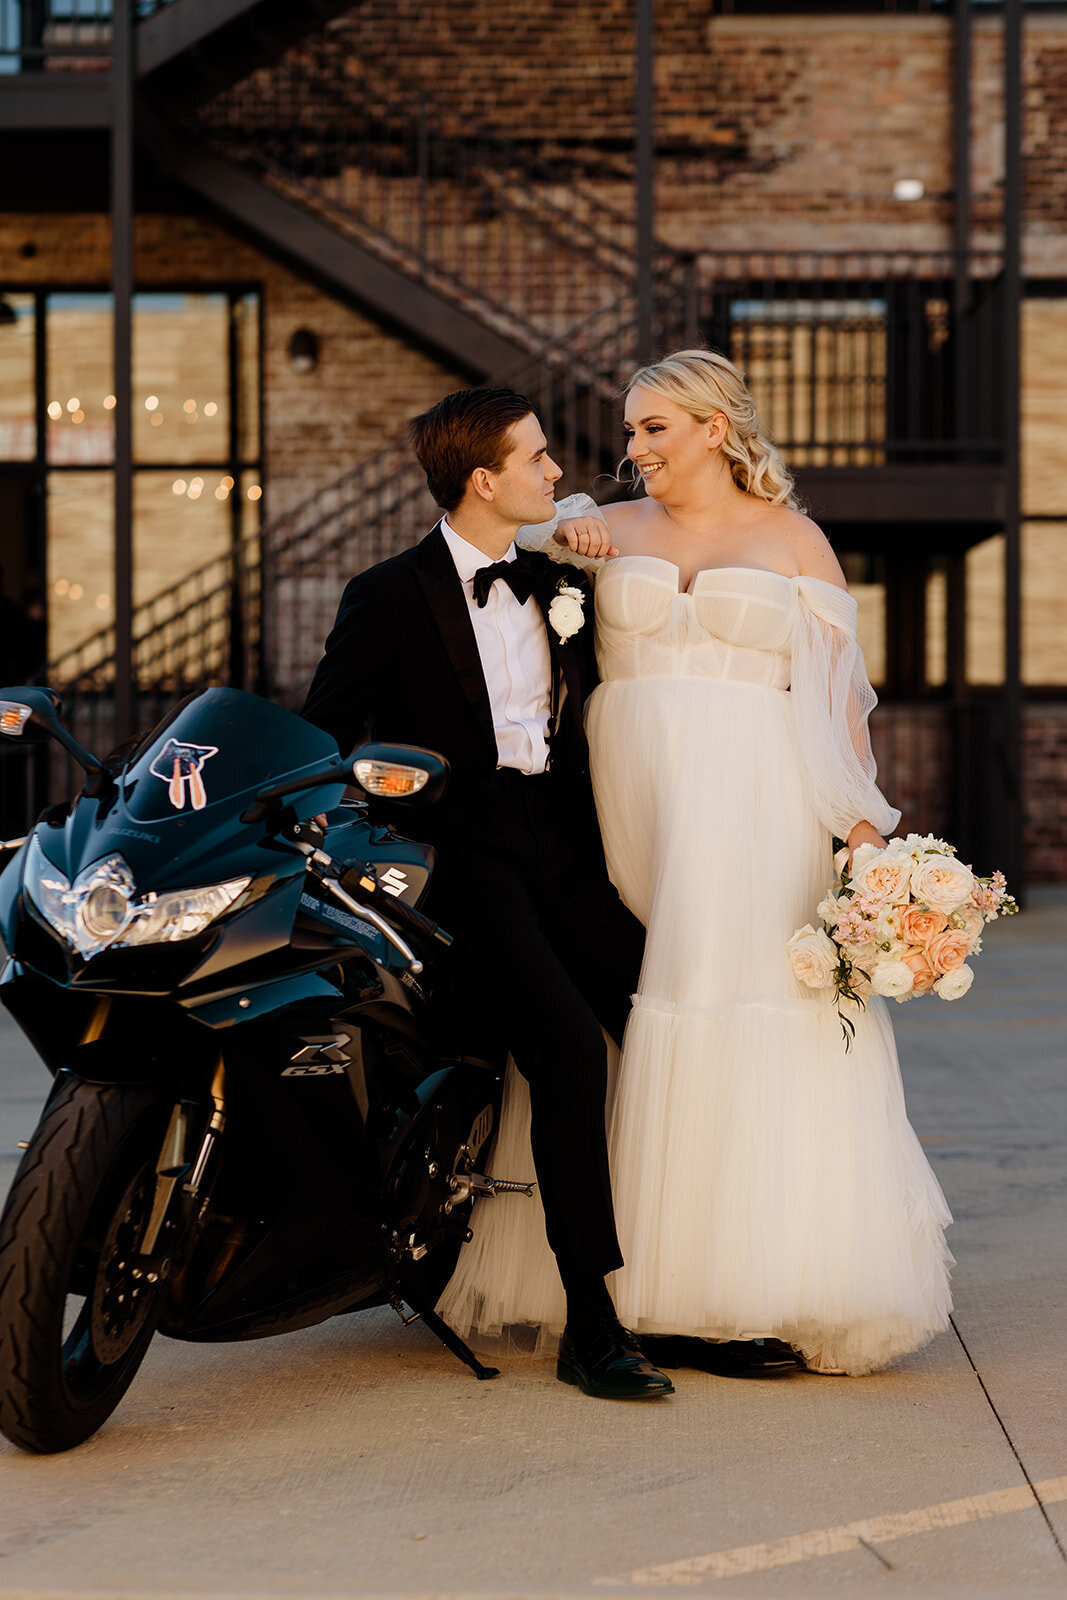 Chicago-comapny251-wedding-motorcycle-2